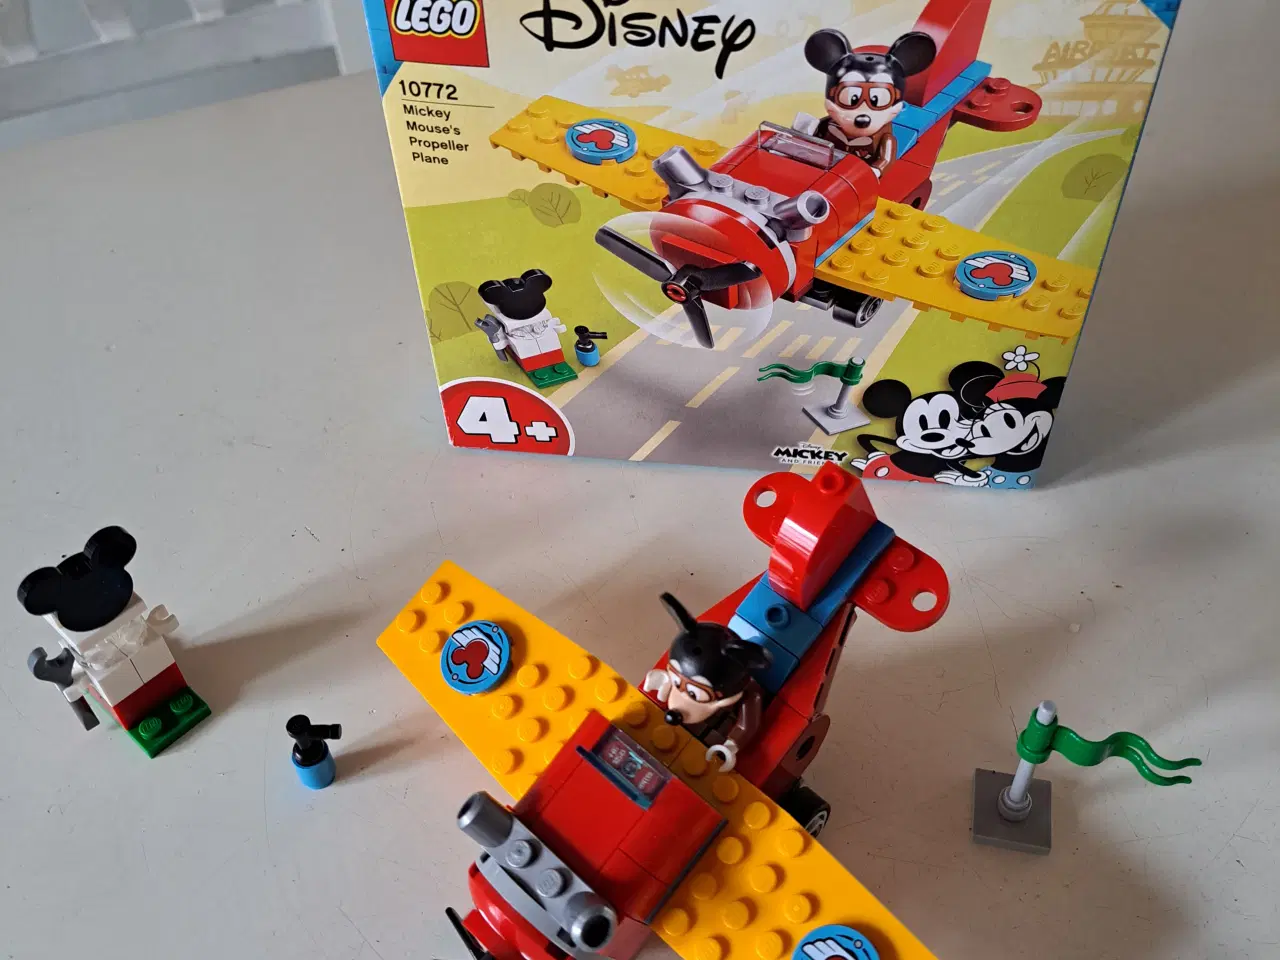 Billede 1 - Lego Disney 10772